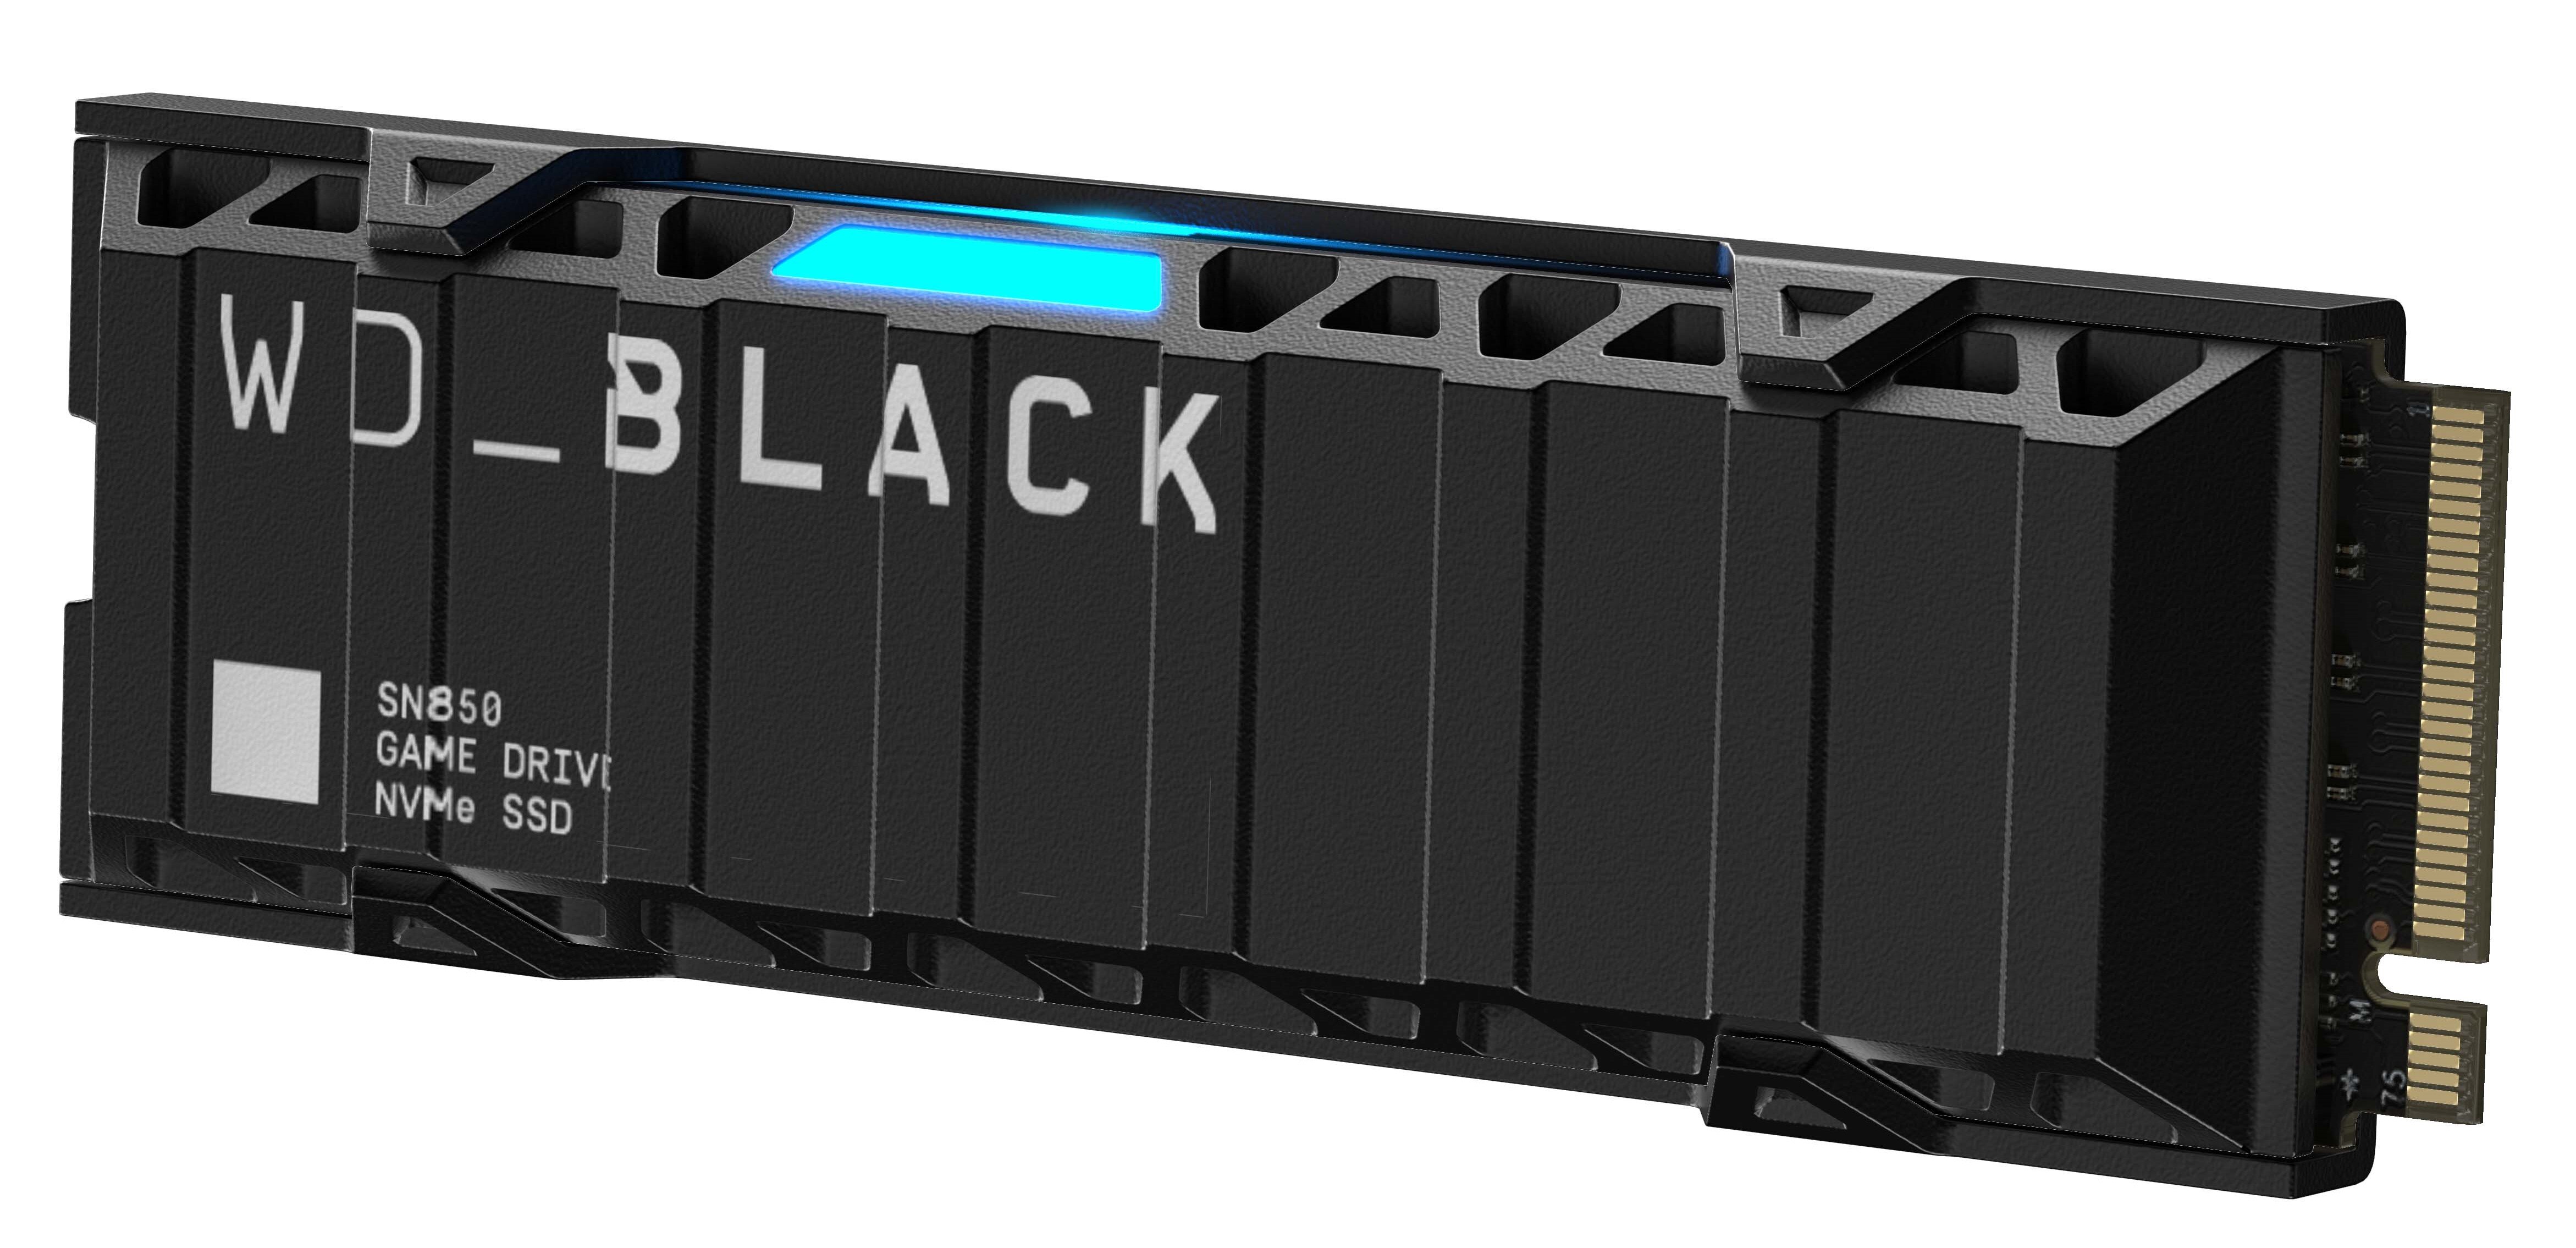 WD_BLACK SN850P NVMe SSD PS5 Gaming Drive